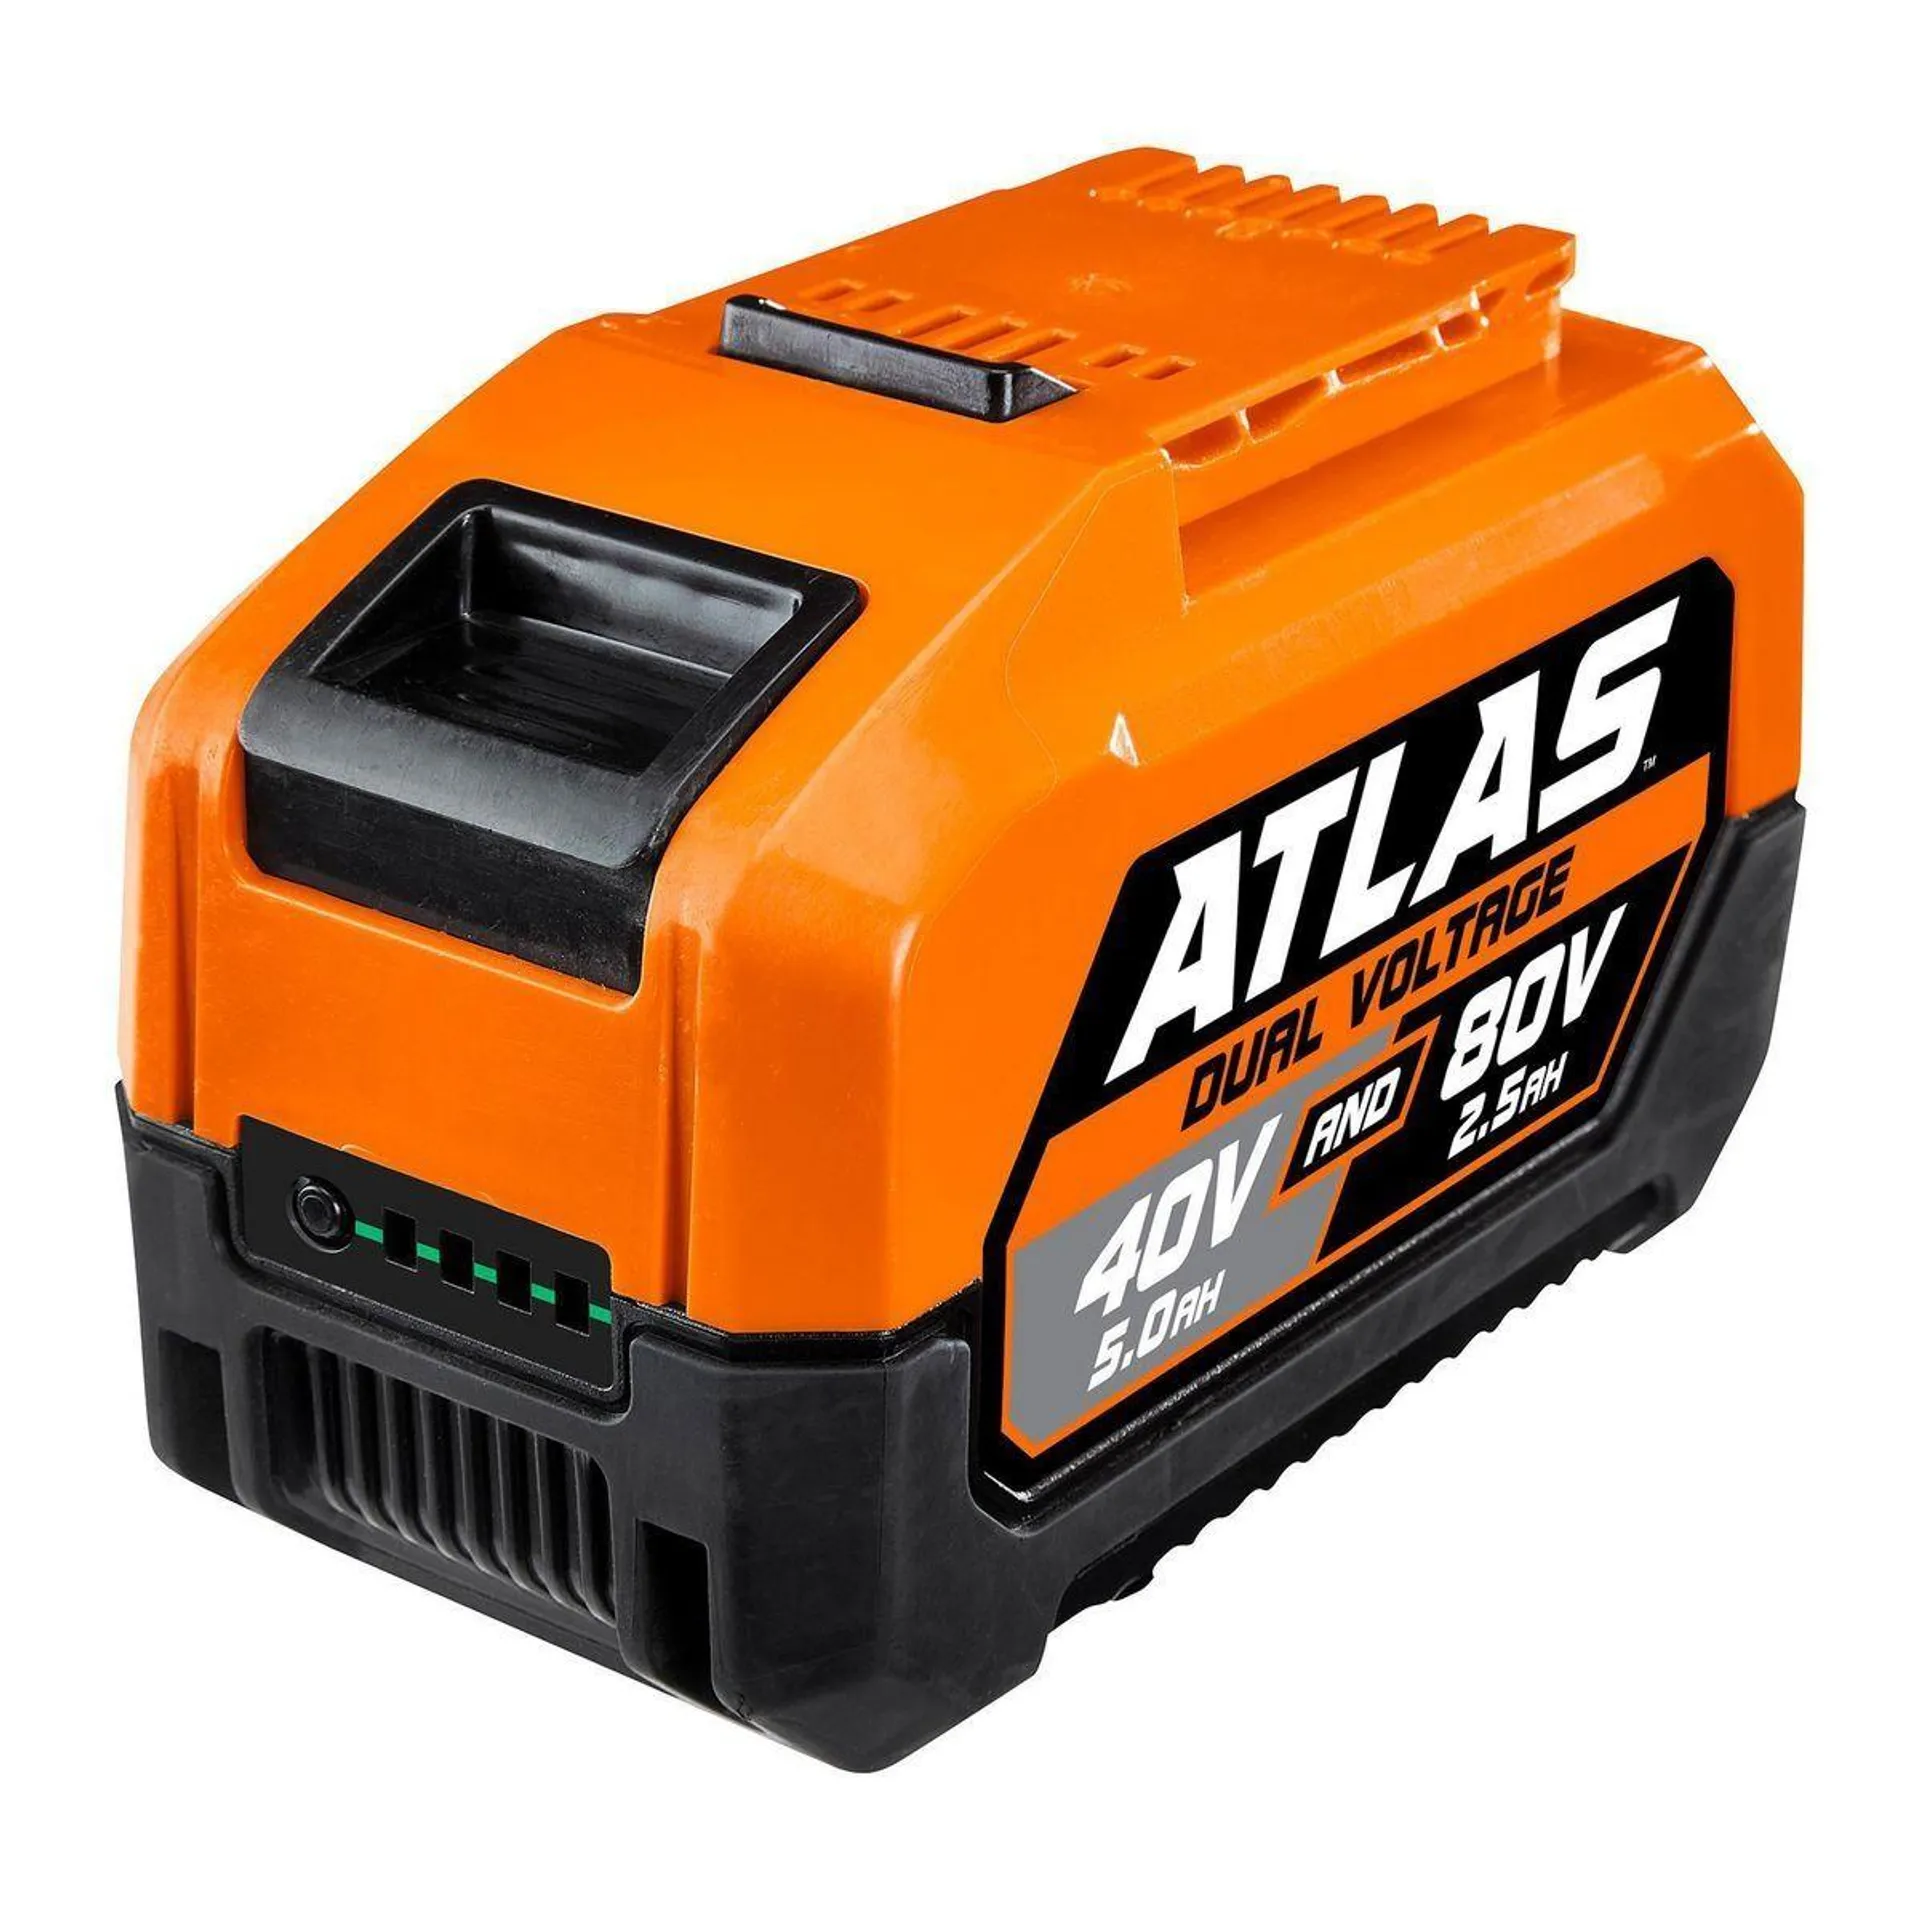 ATLAS 80V 2.5 Ah and 40V 5.0 Ah Lithium-Ion Battery